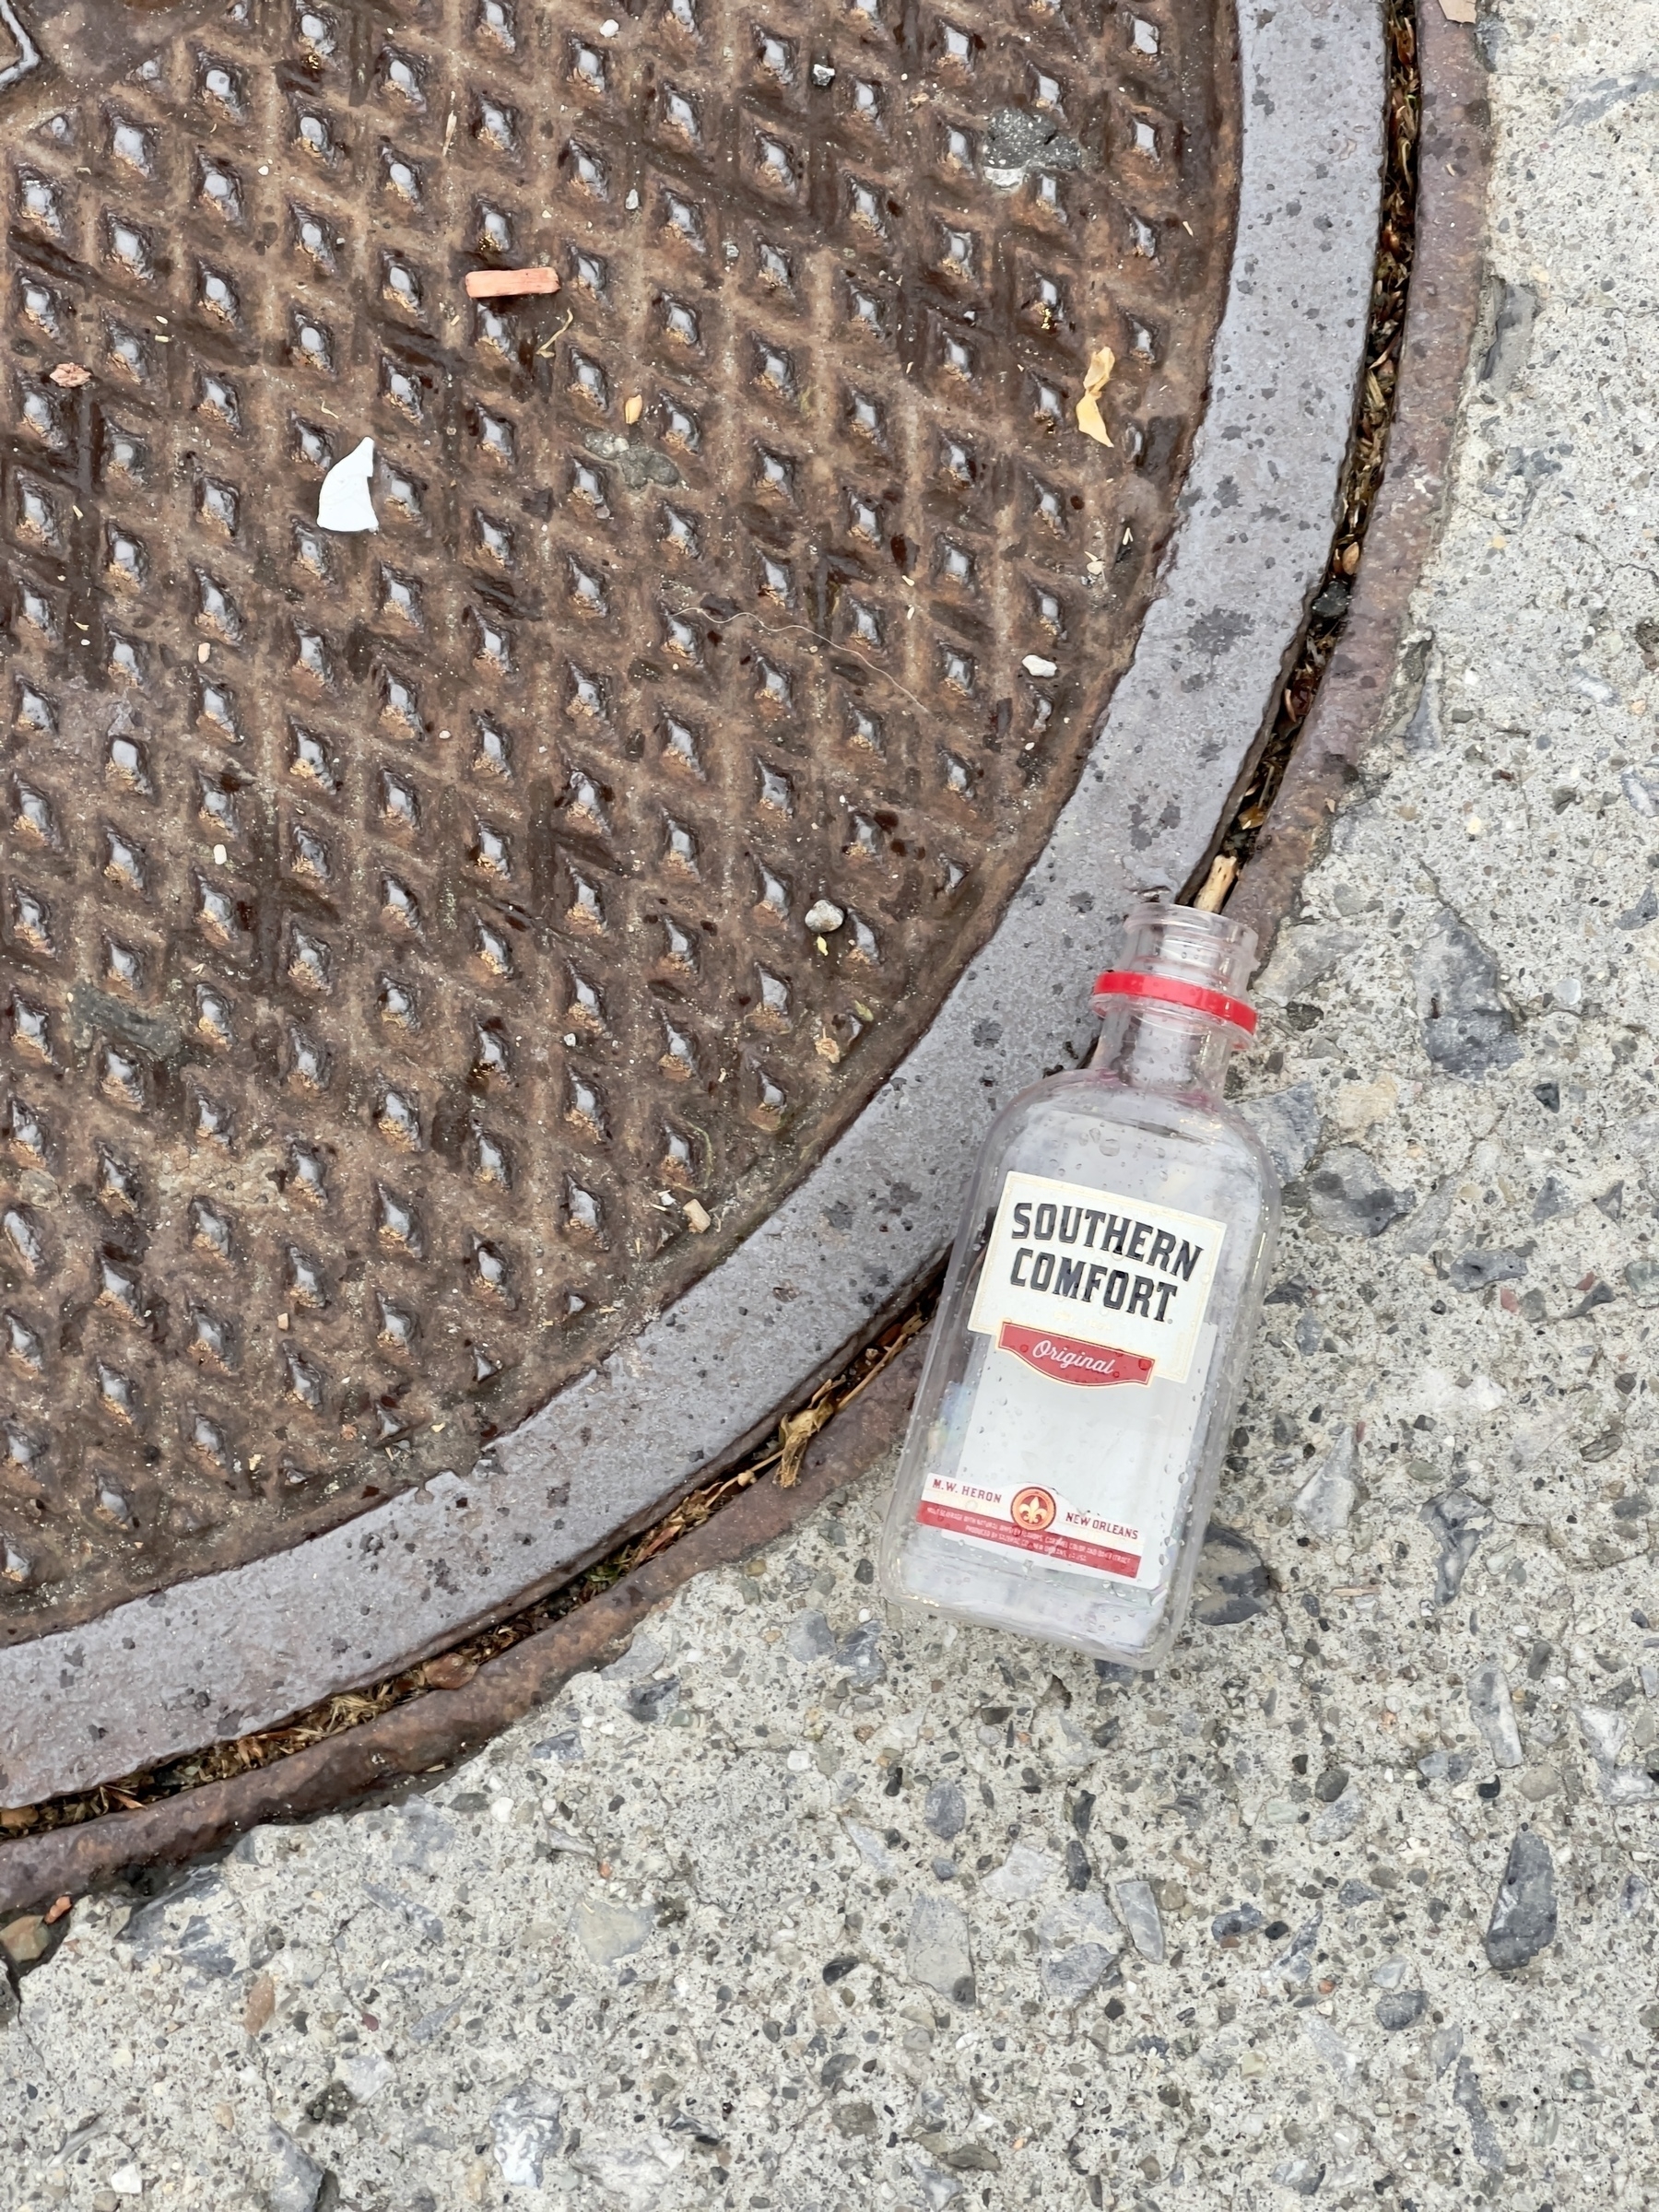 Mini Southern Comfort bottle near the edge of a manhole cover.